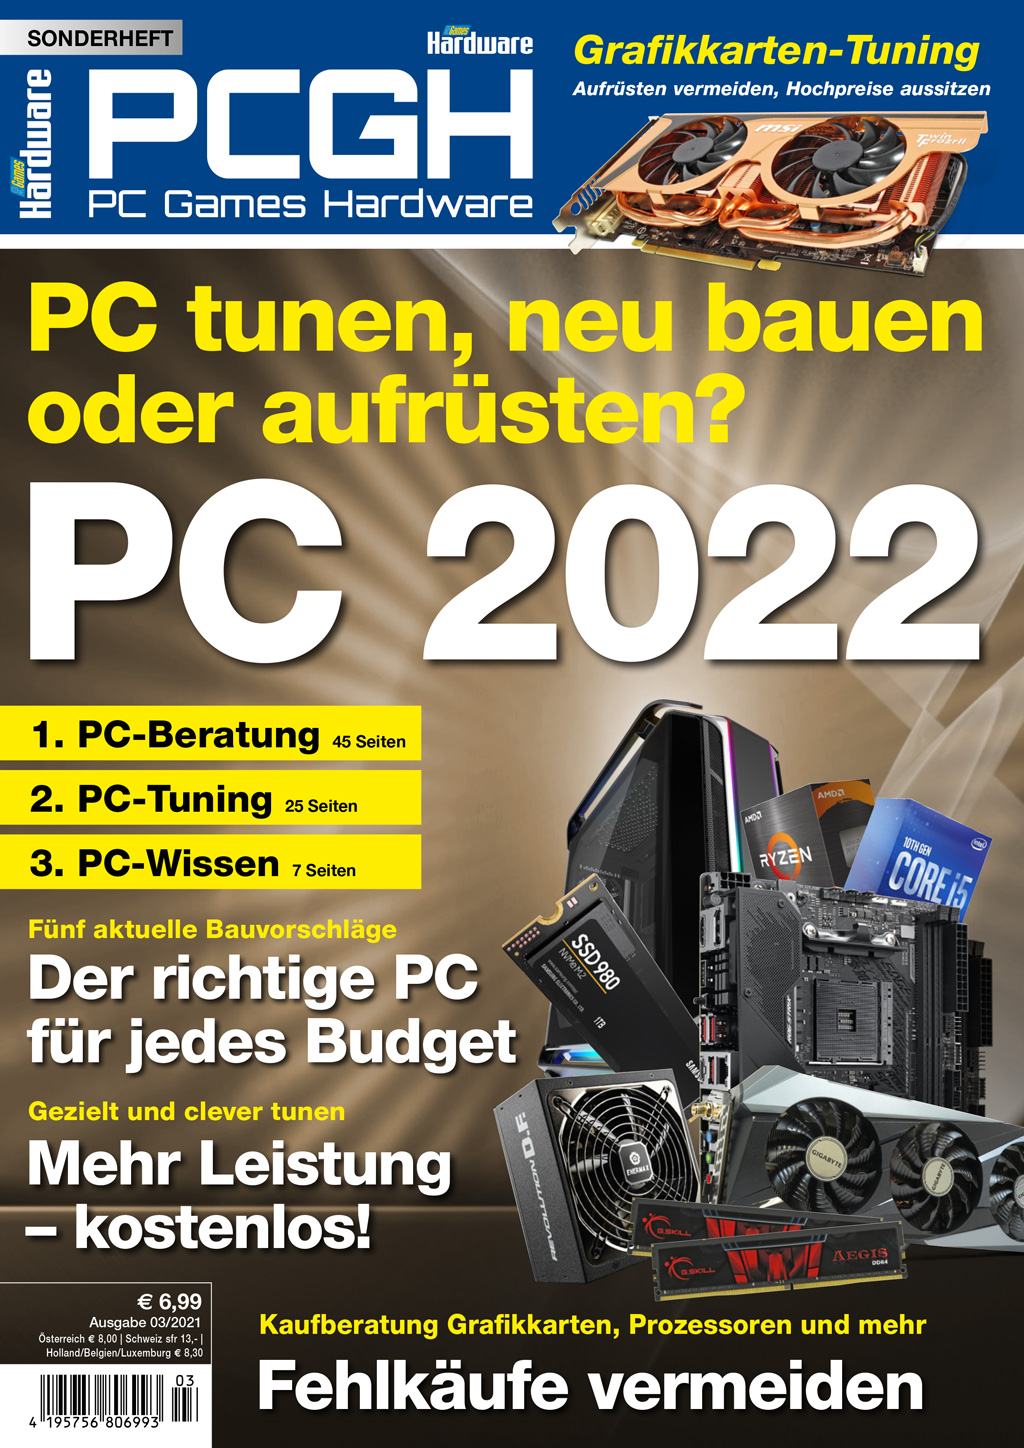 PCGH Sonderheft ePaper 03/2021